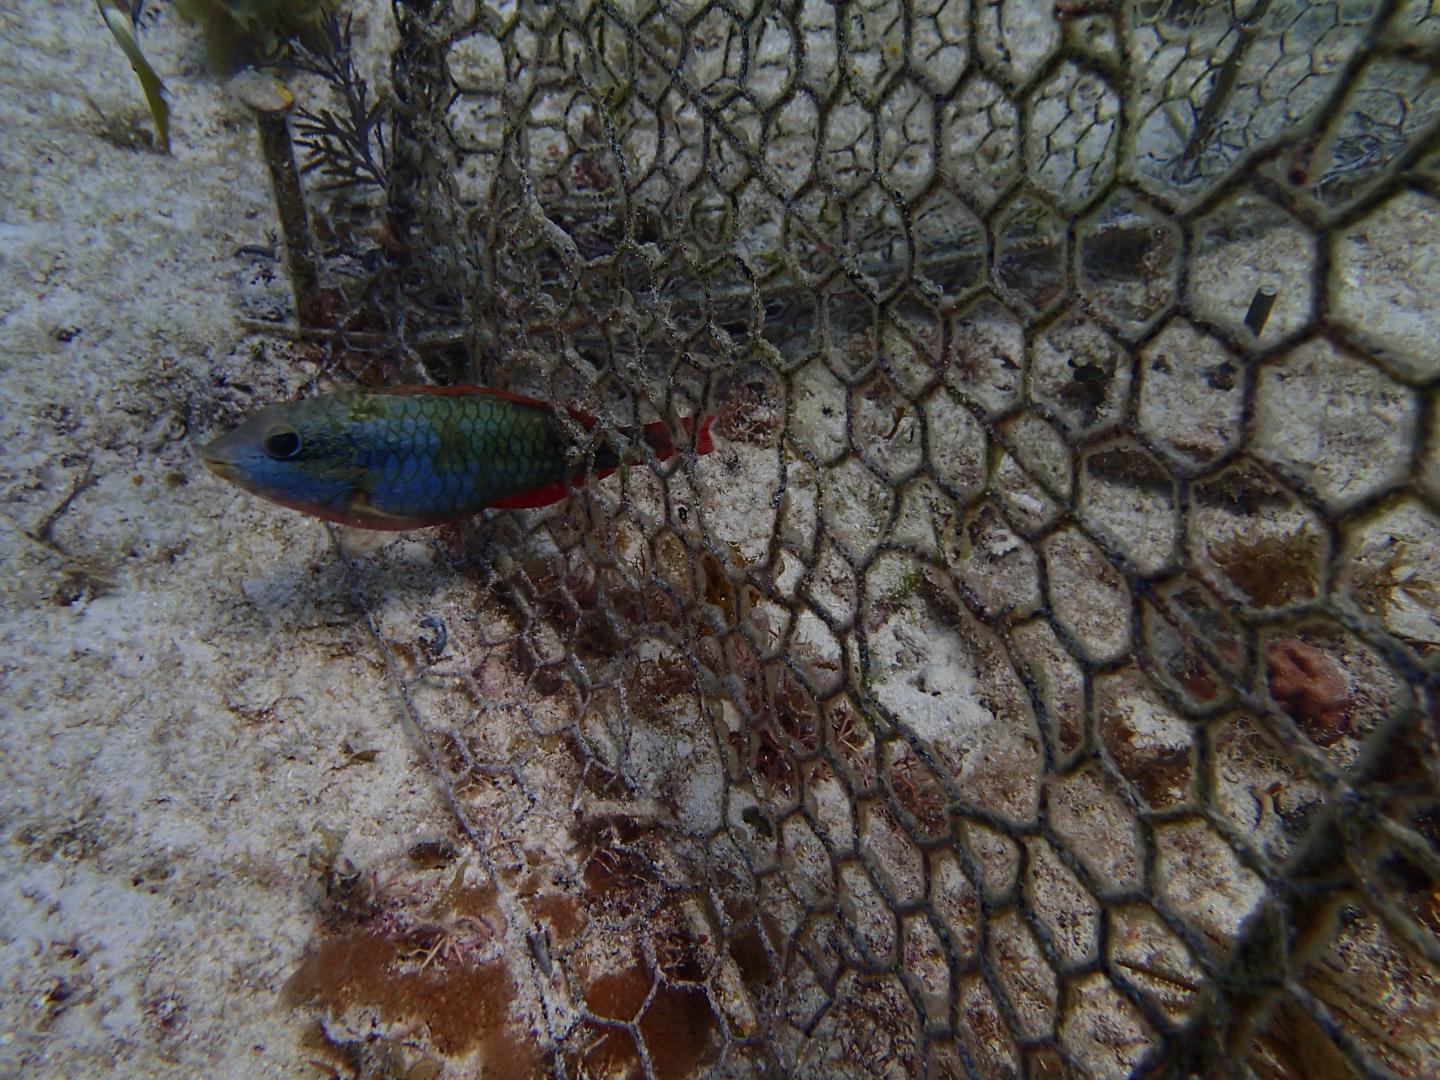 Small Parrotfish Swims through Enclosure